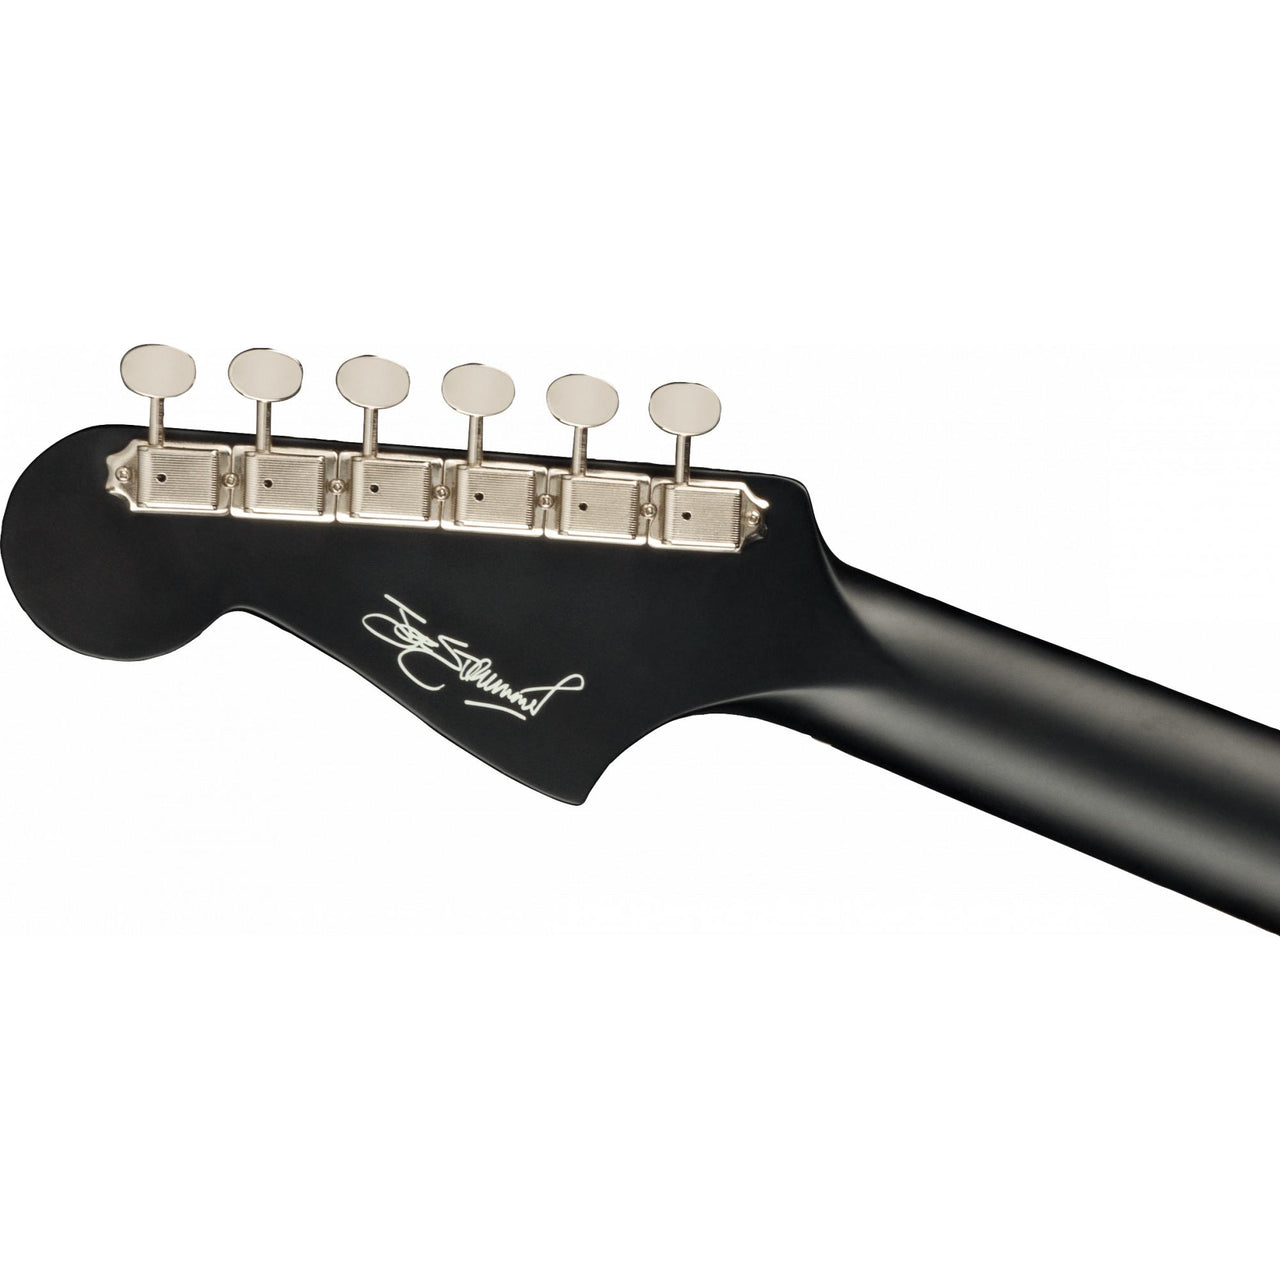 Guitarra Fender Strummer Negro Matte Electroacustica Con Funda 0971722106